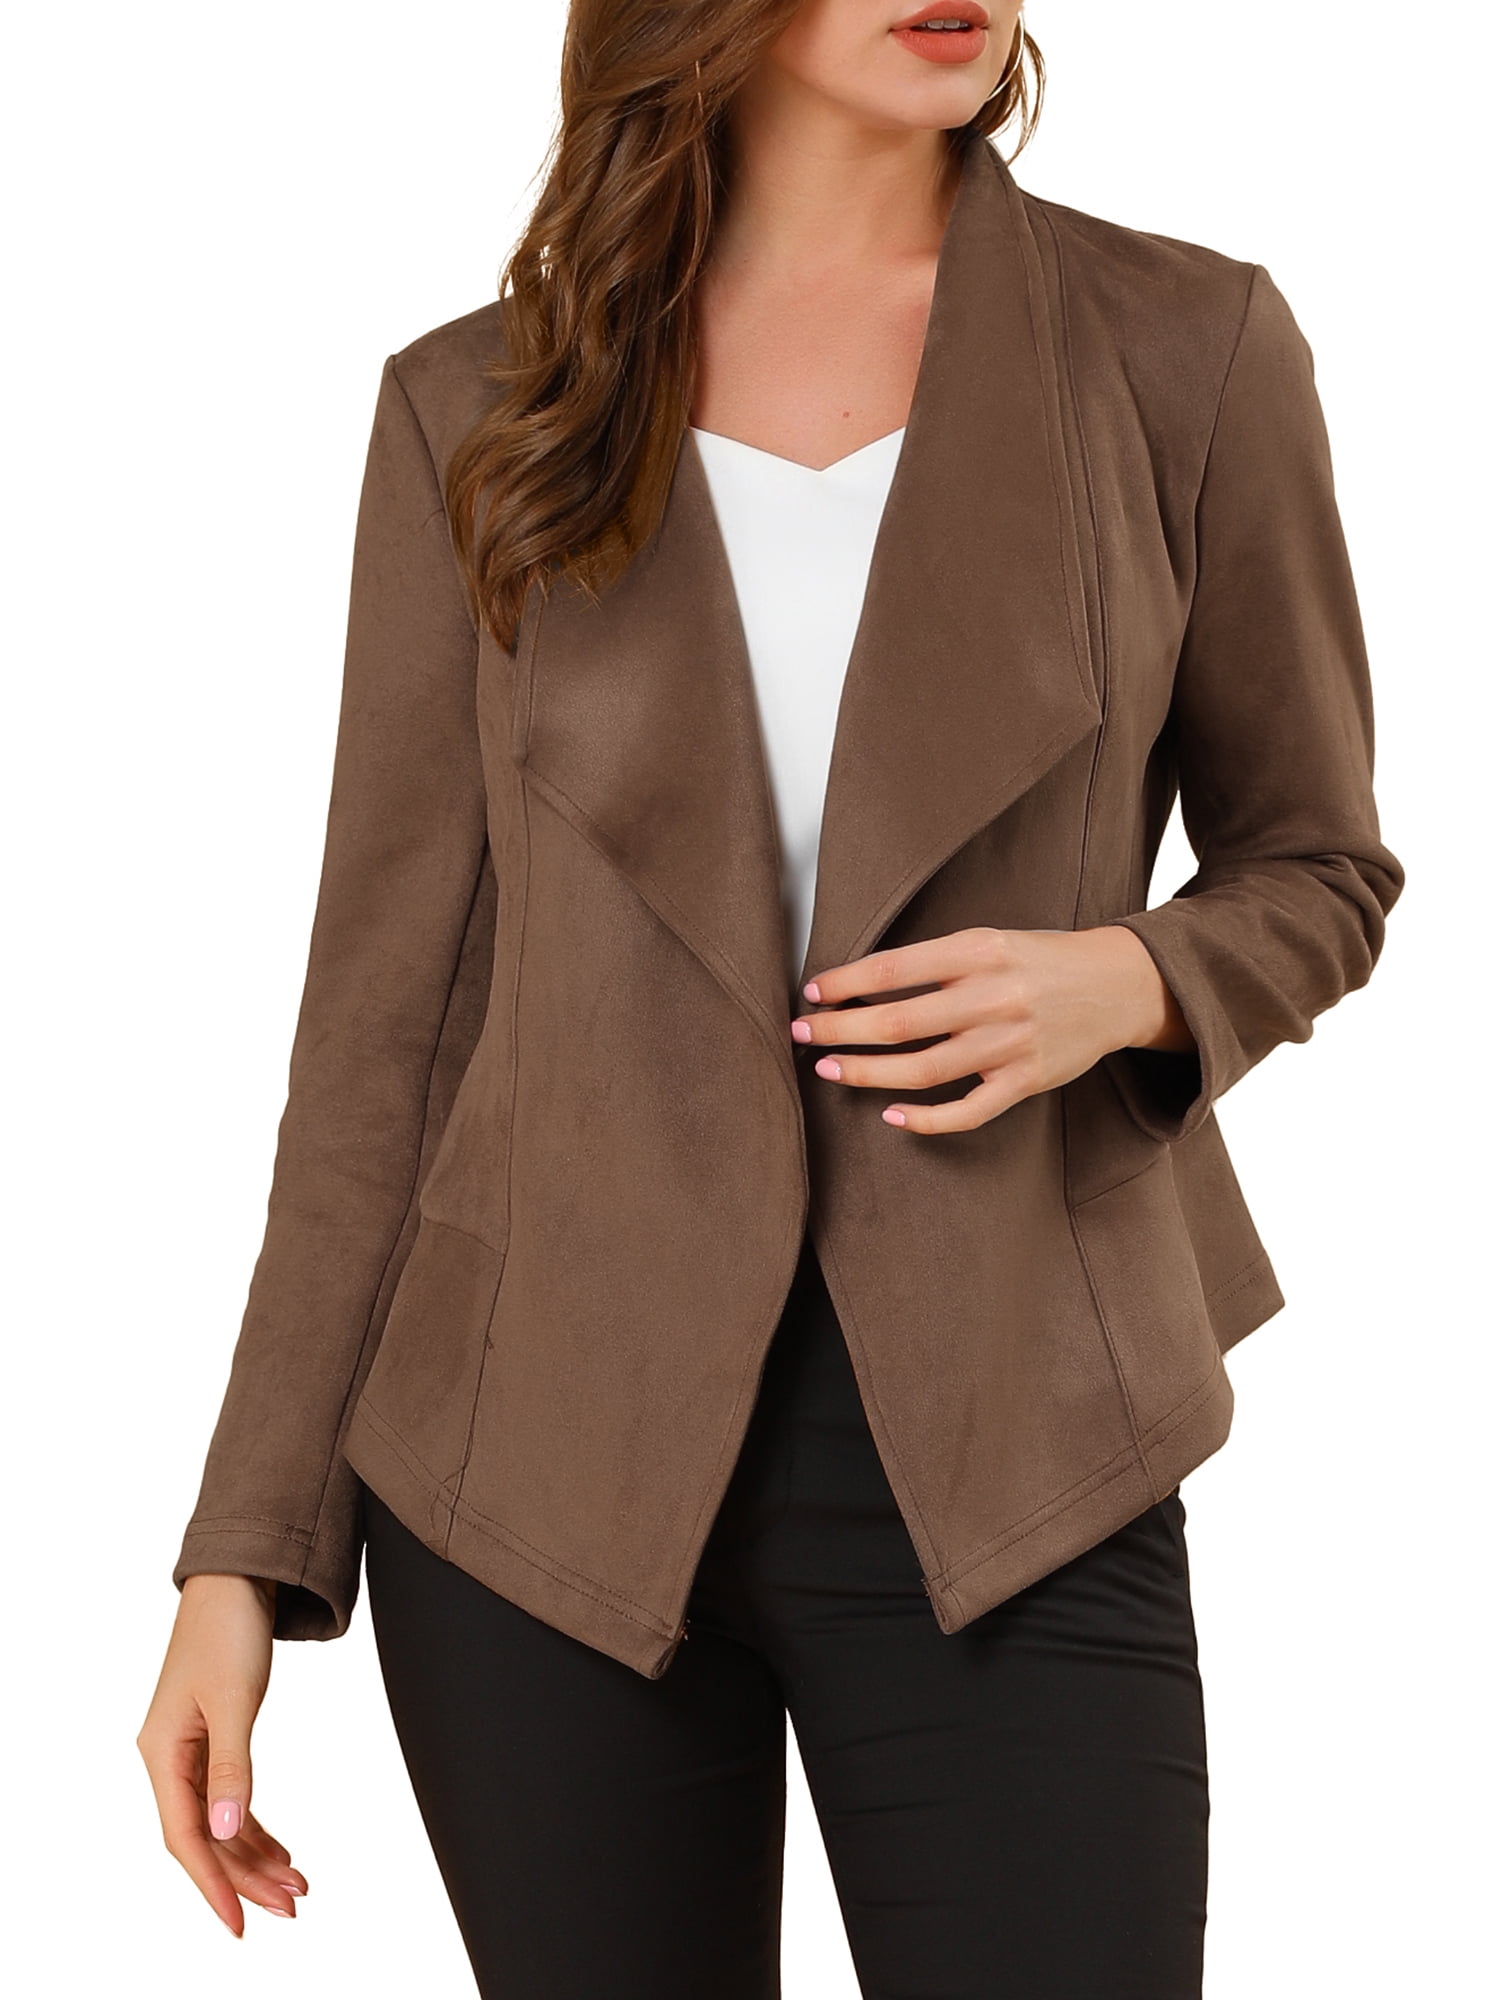 Women's Zipper Long Sleeve Asymmetrical Collar Lapel Outwear Jacket Cardigan